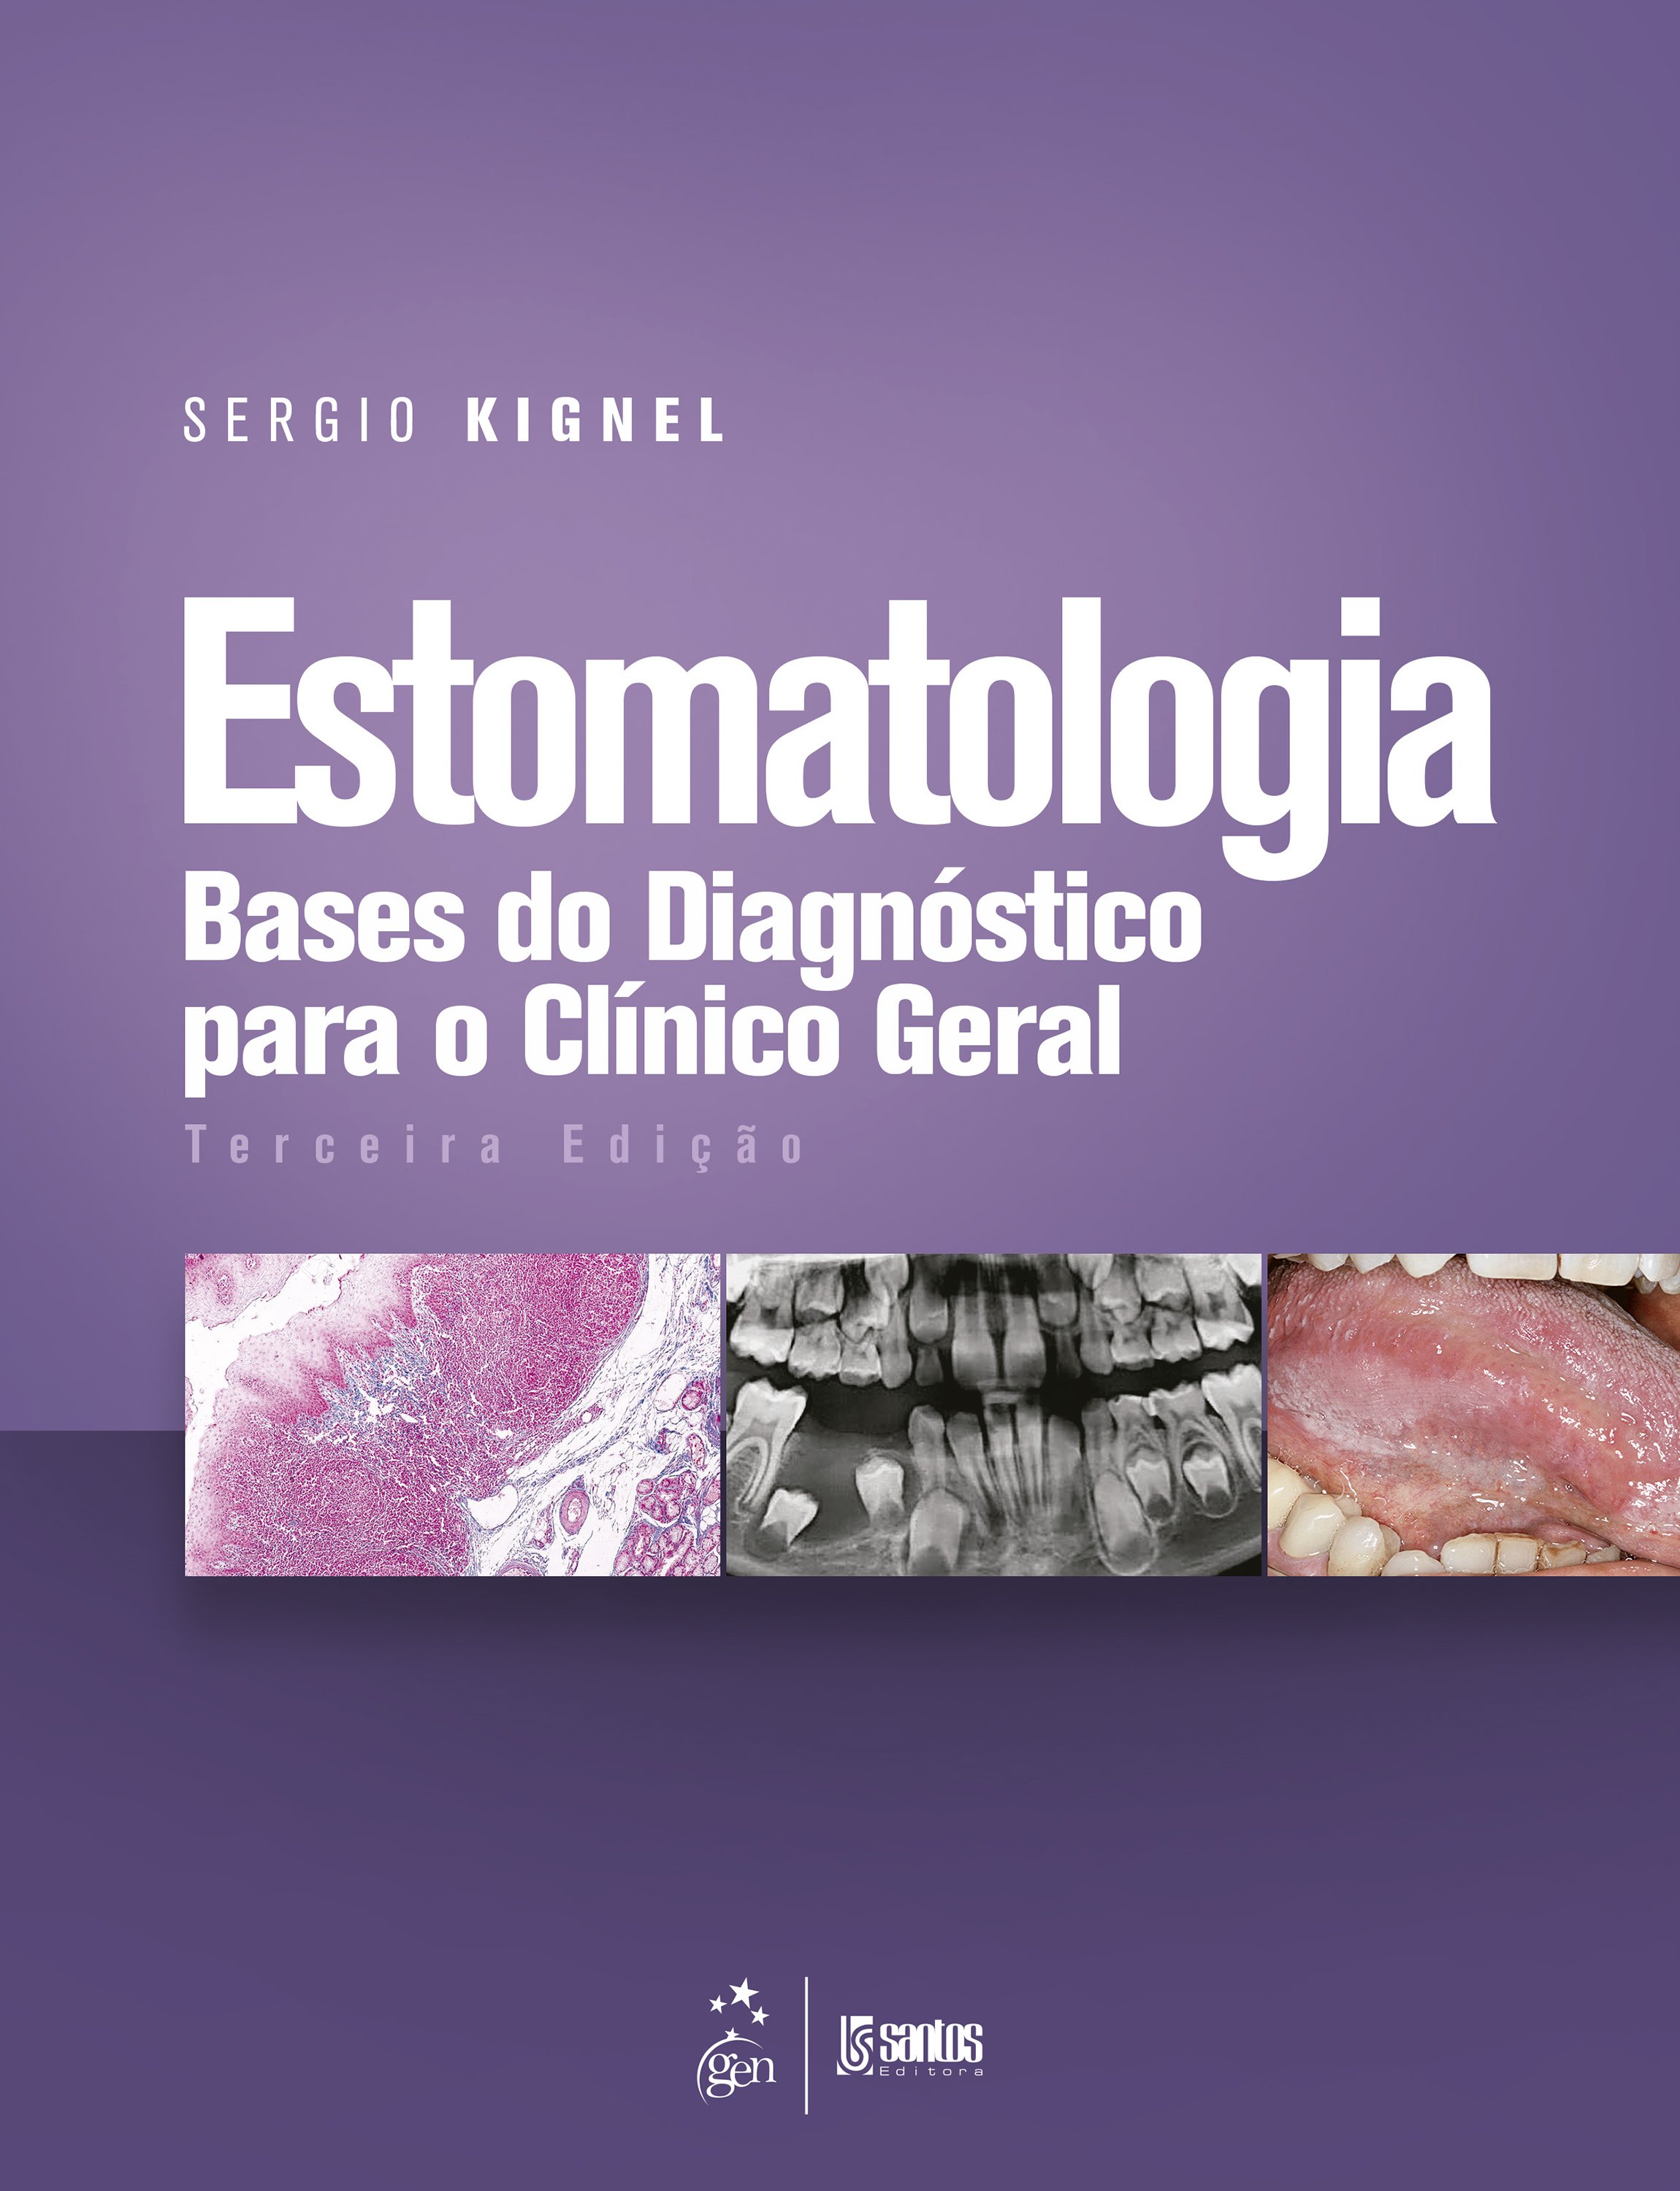 Estomatologia - Bases do Diagnóstico Para o Clínico Geral - 03Ed/20